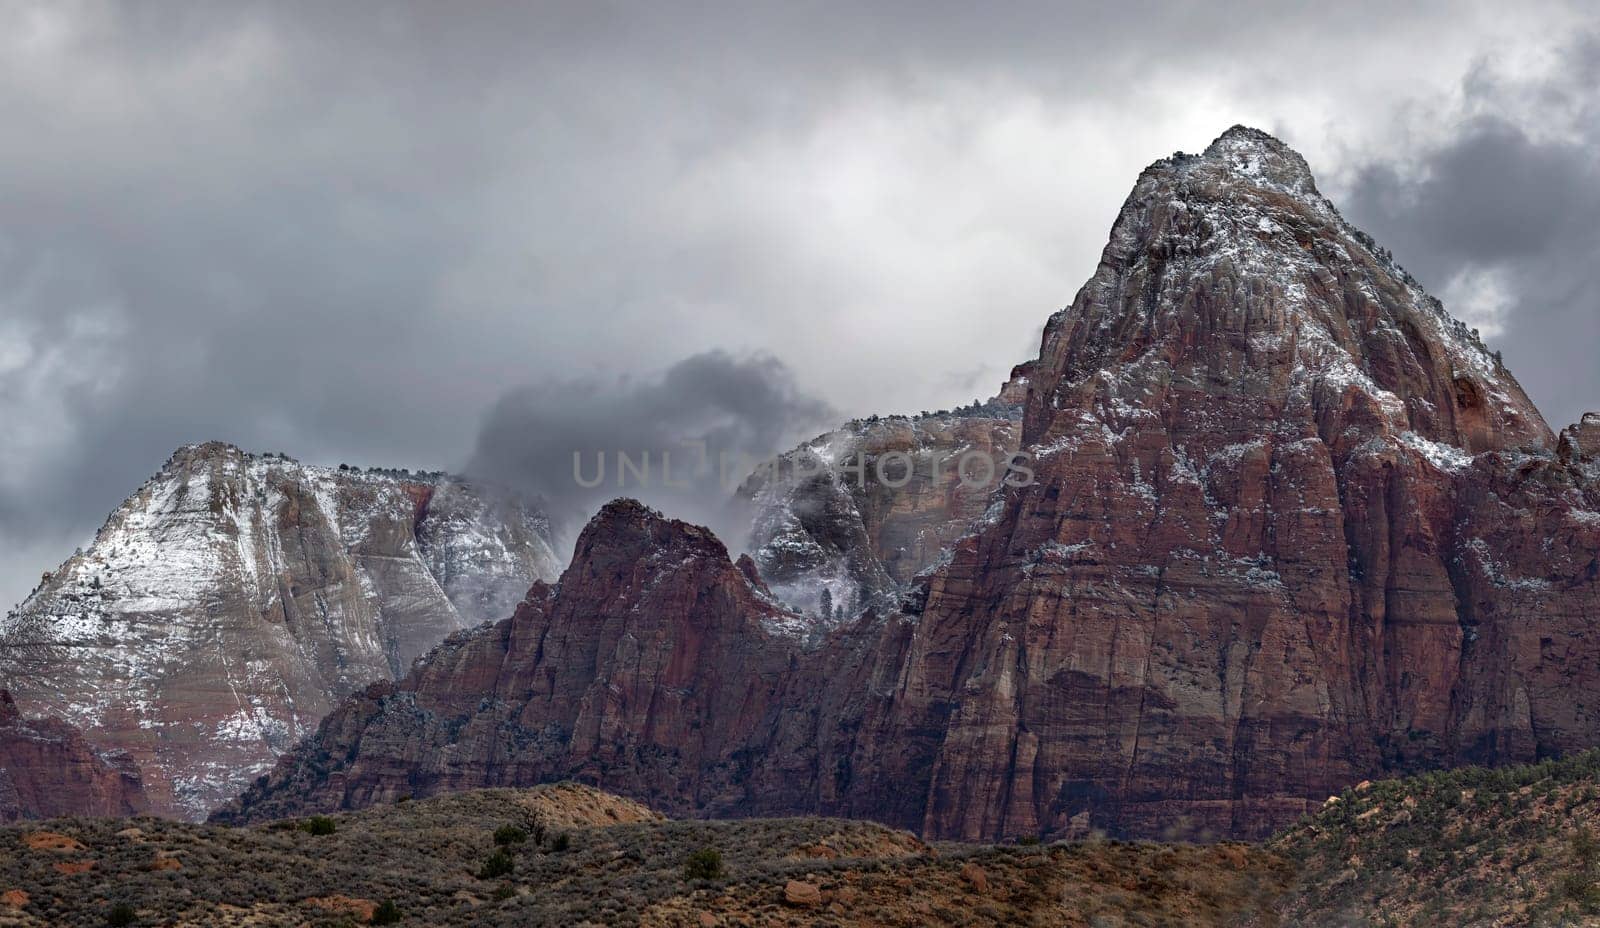 Early season snow has fallen at Zion National Park, Utah